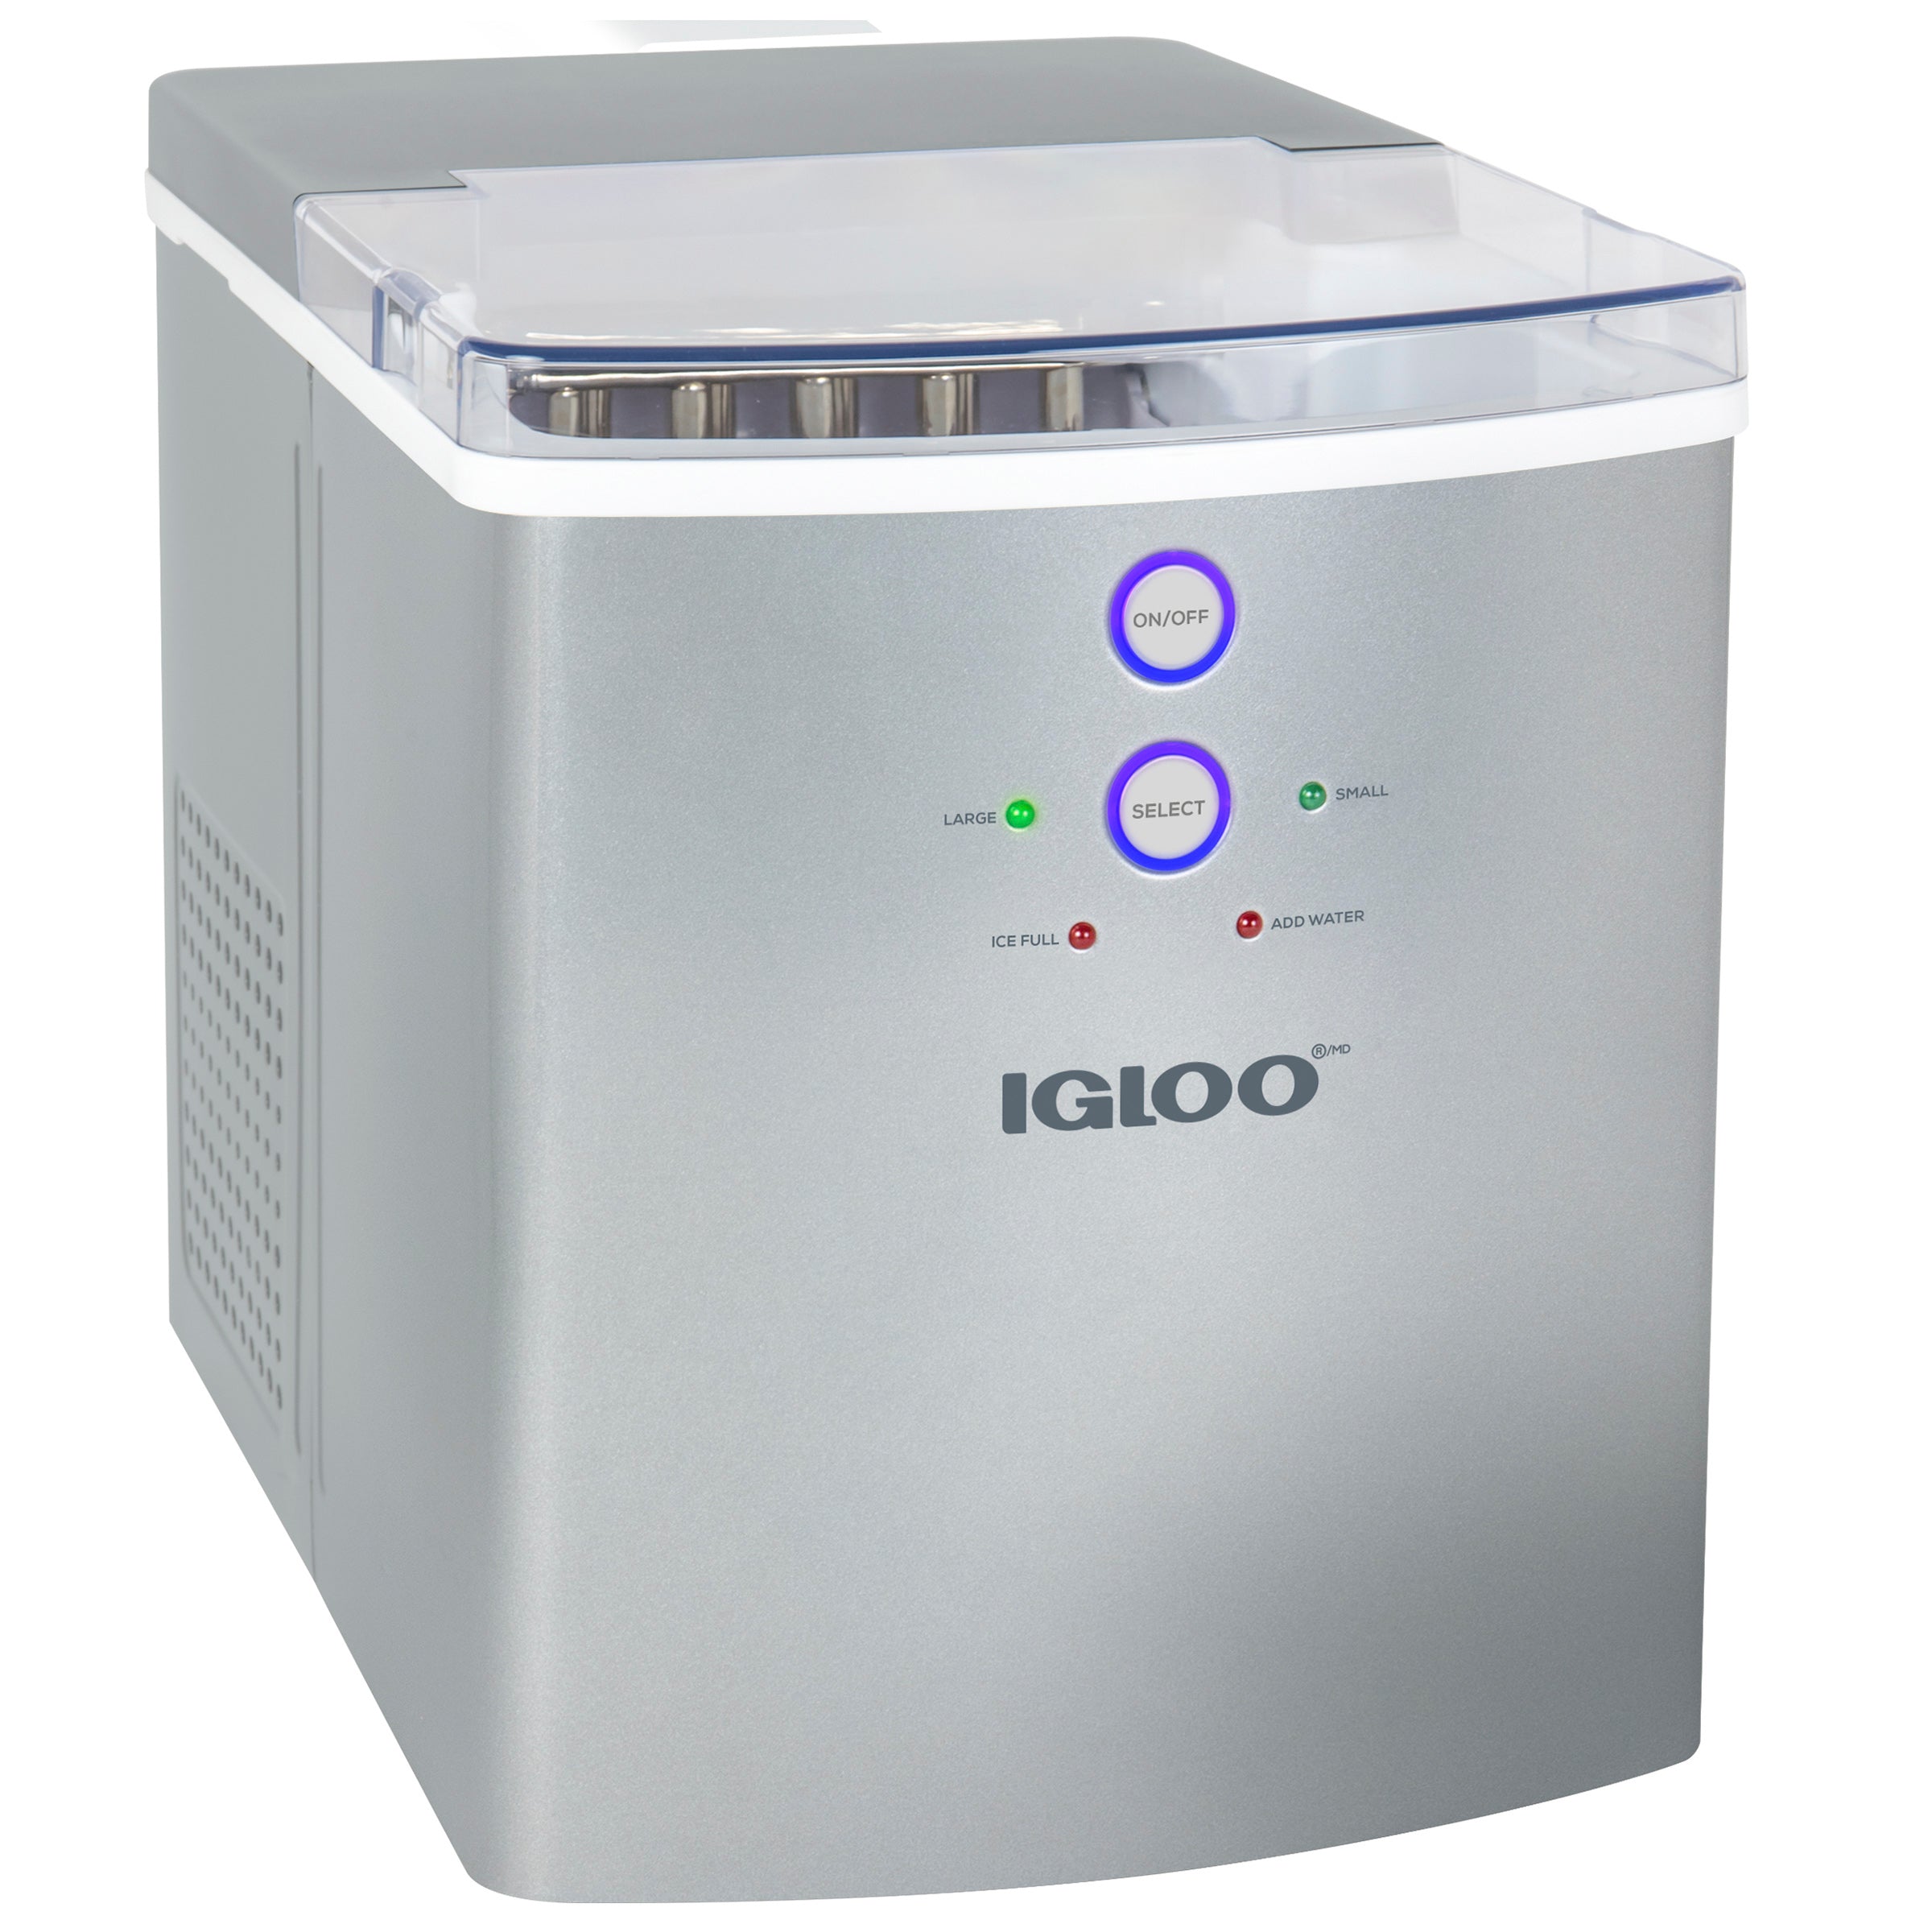 IGLOO? 33-Pound Automatic Portable Countertop Ice Maker Machine, Silver